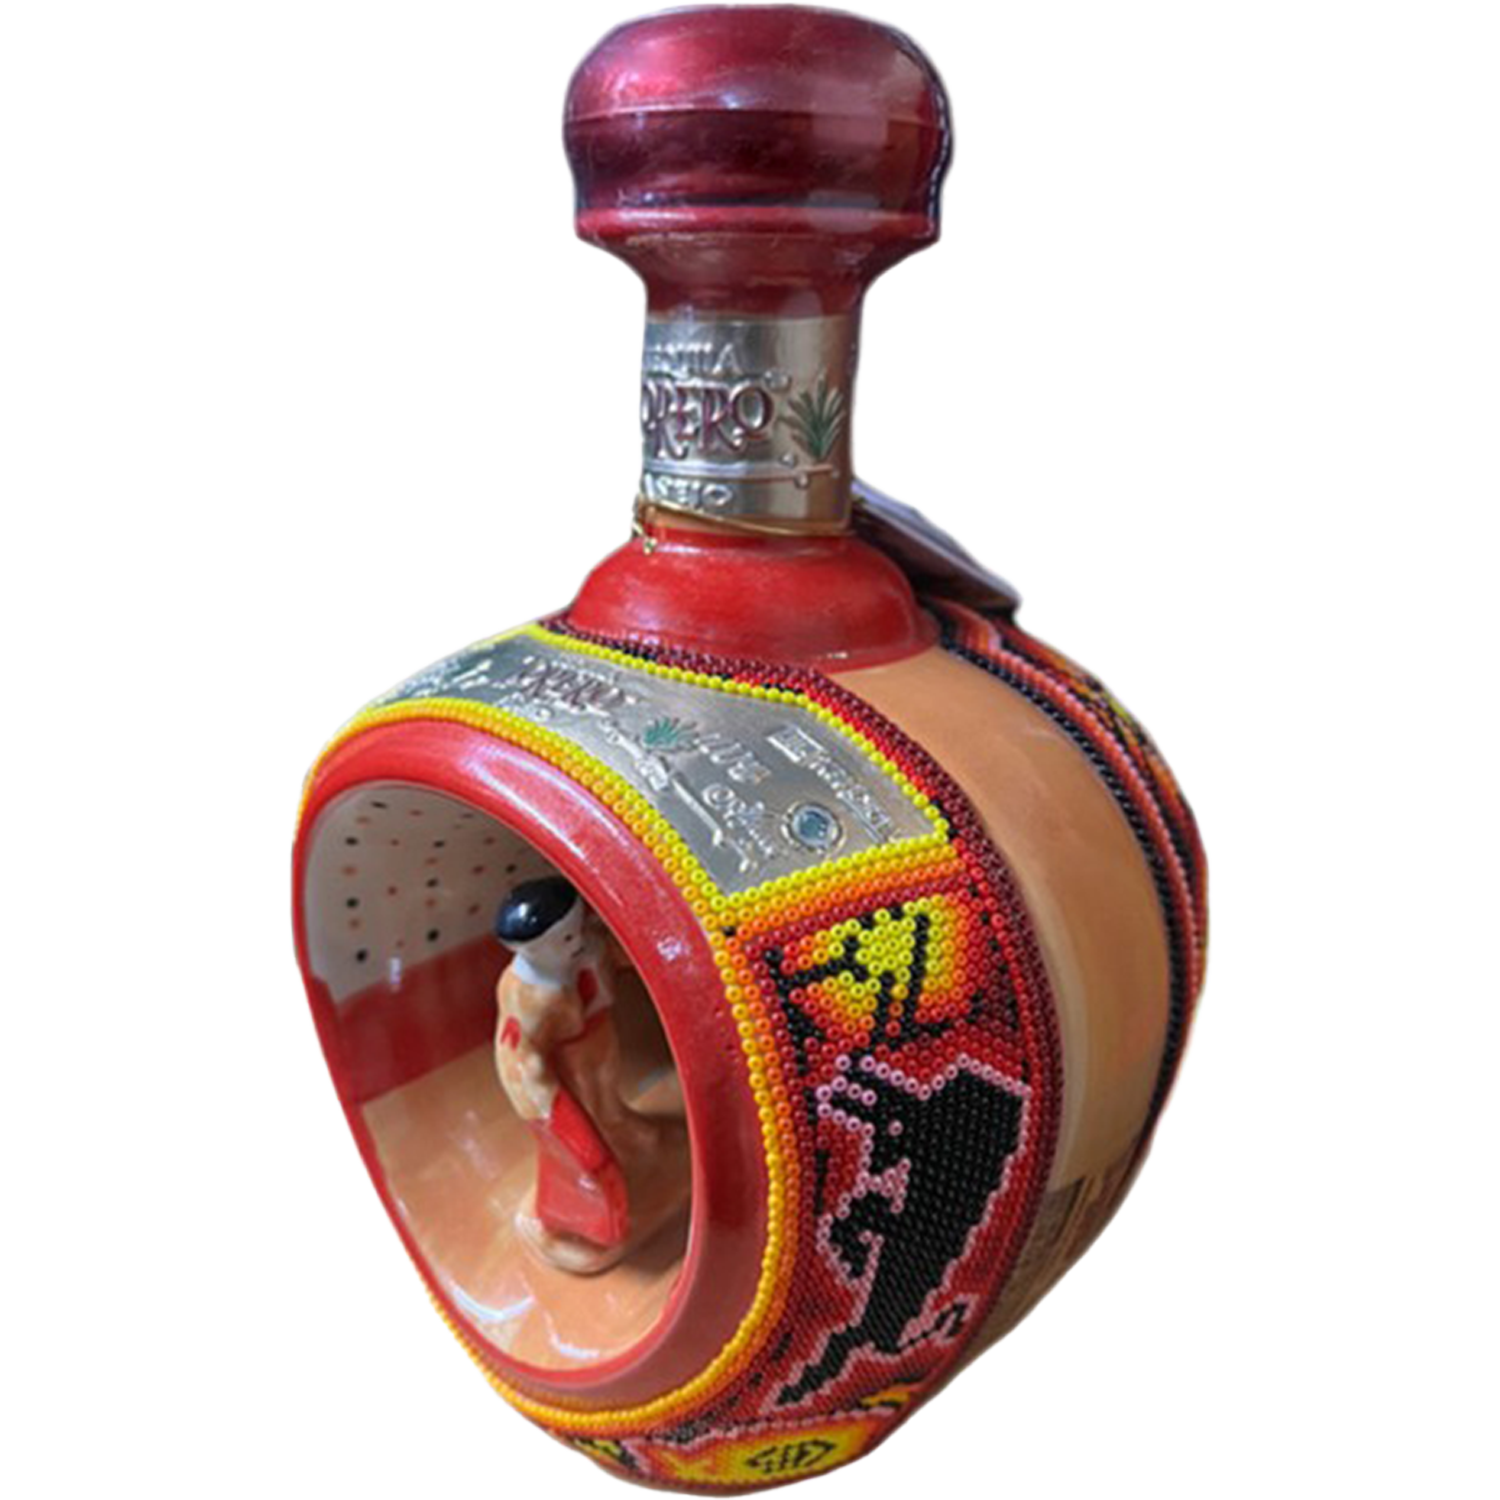 Torero Tequila Huichol (Matador Beaded Bottle) Reposado Tequila